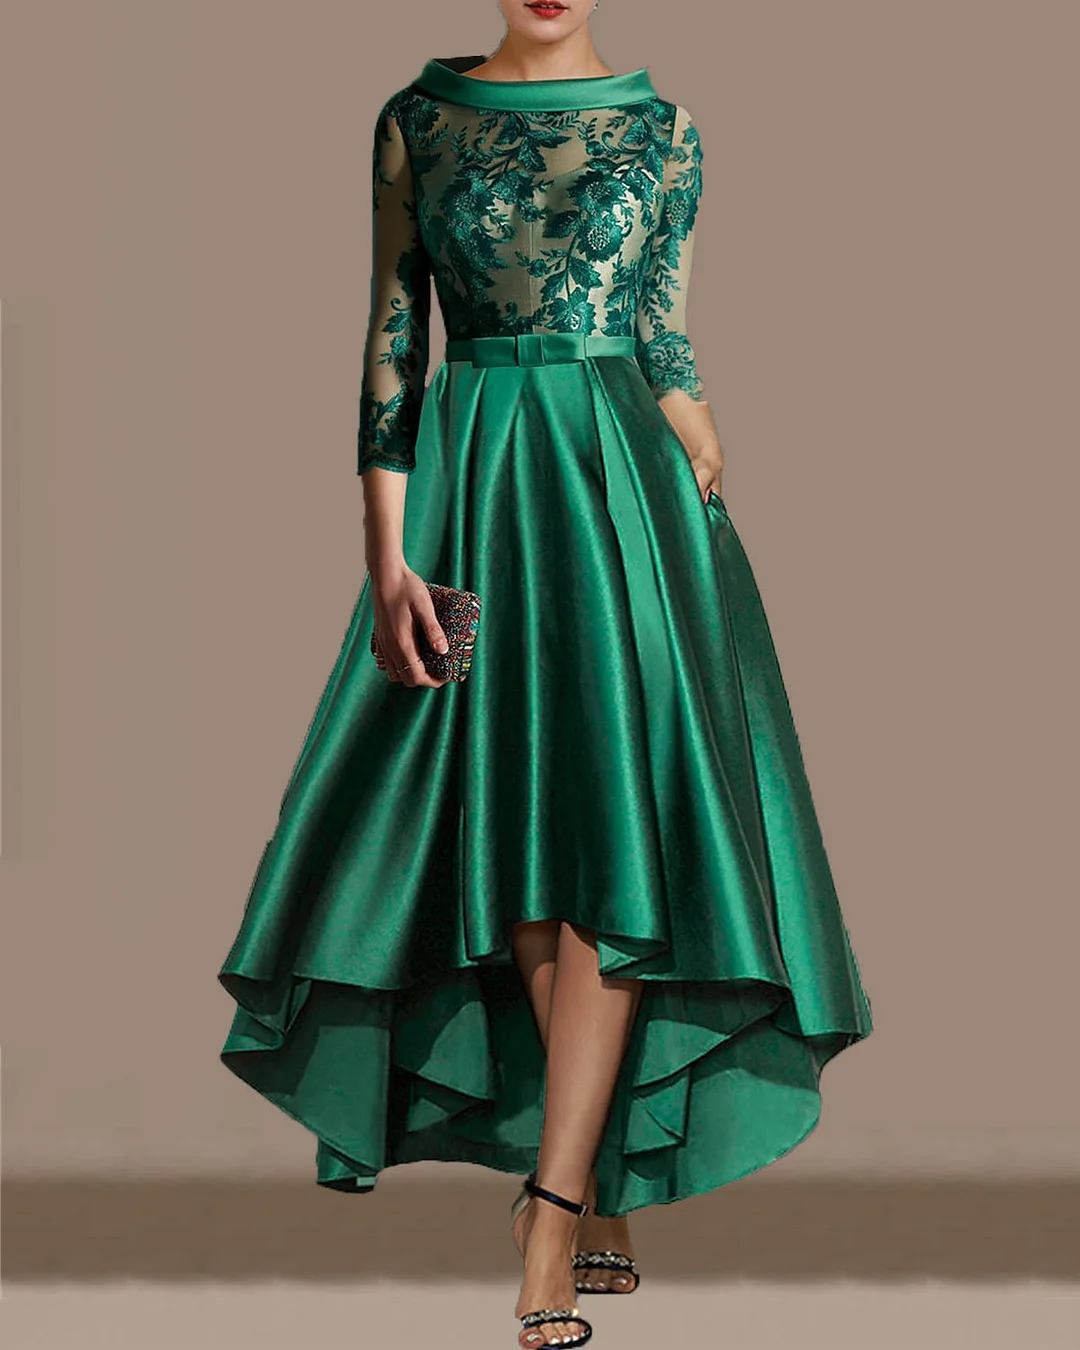 Elegant Green Embroidered Satin Dress